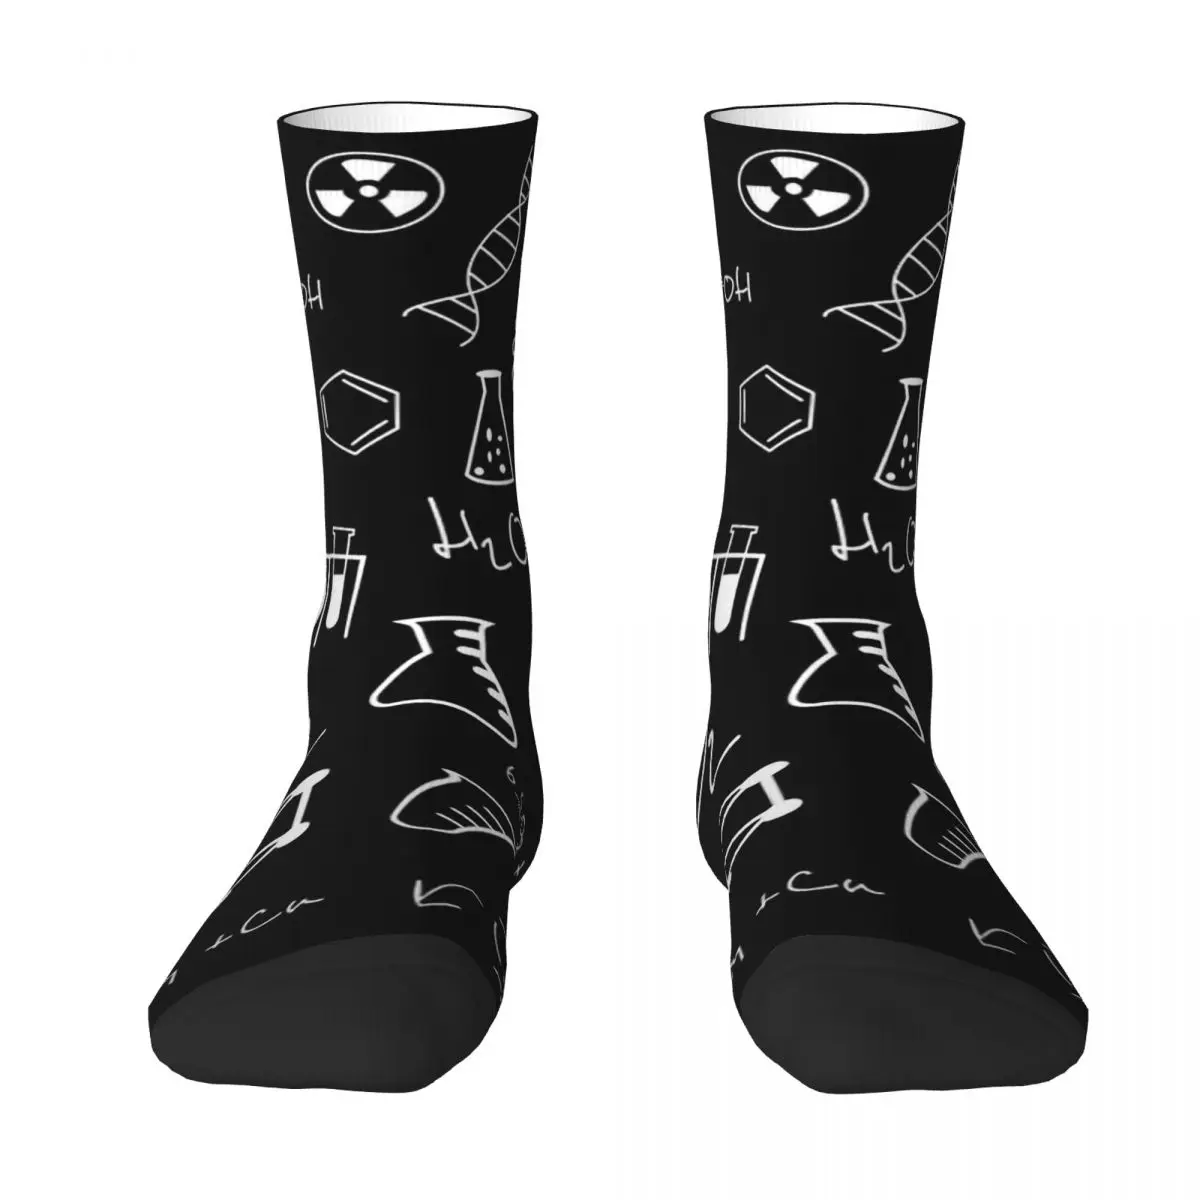 Химия наука взрослые носки, носки унисекс, мужские носки женские носки носки для взрослых химия наука школьная доска носки унисекс мужские носки женские носки